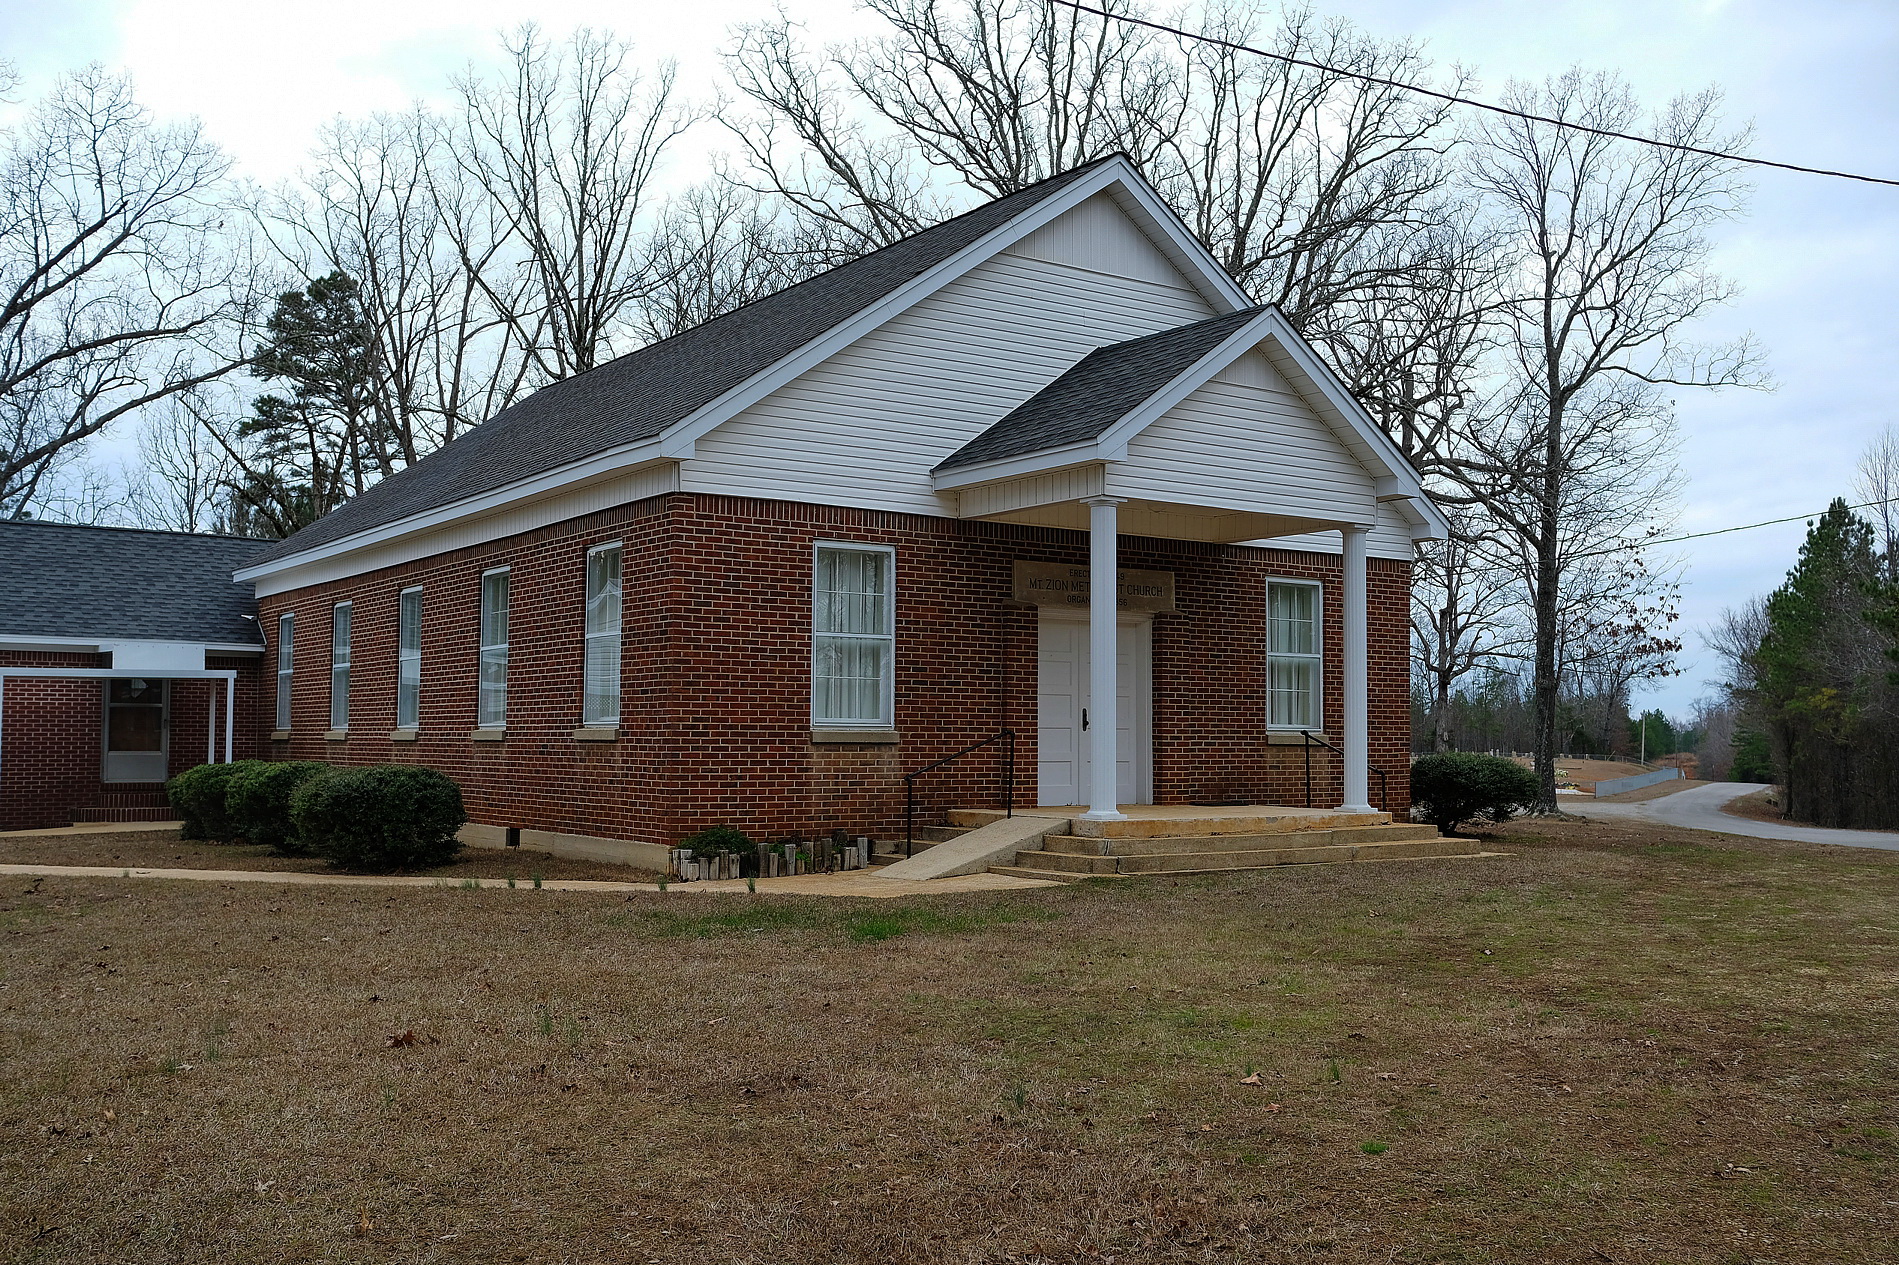  Mt. Zion United Methodist Church in Union County 